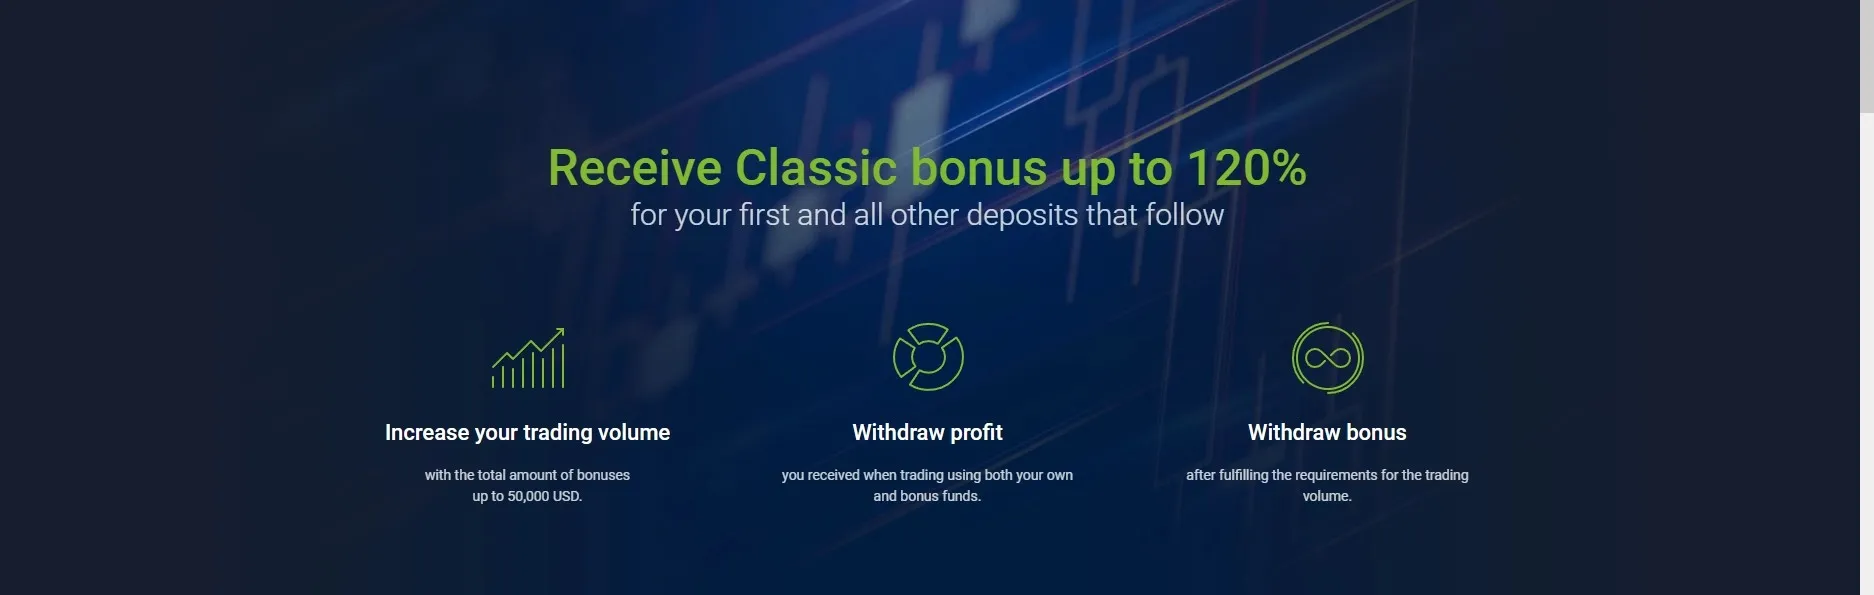 Receive Classic bonus up to 120% Roboforex